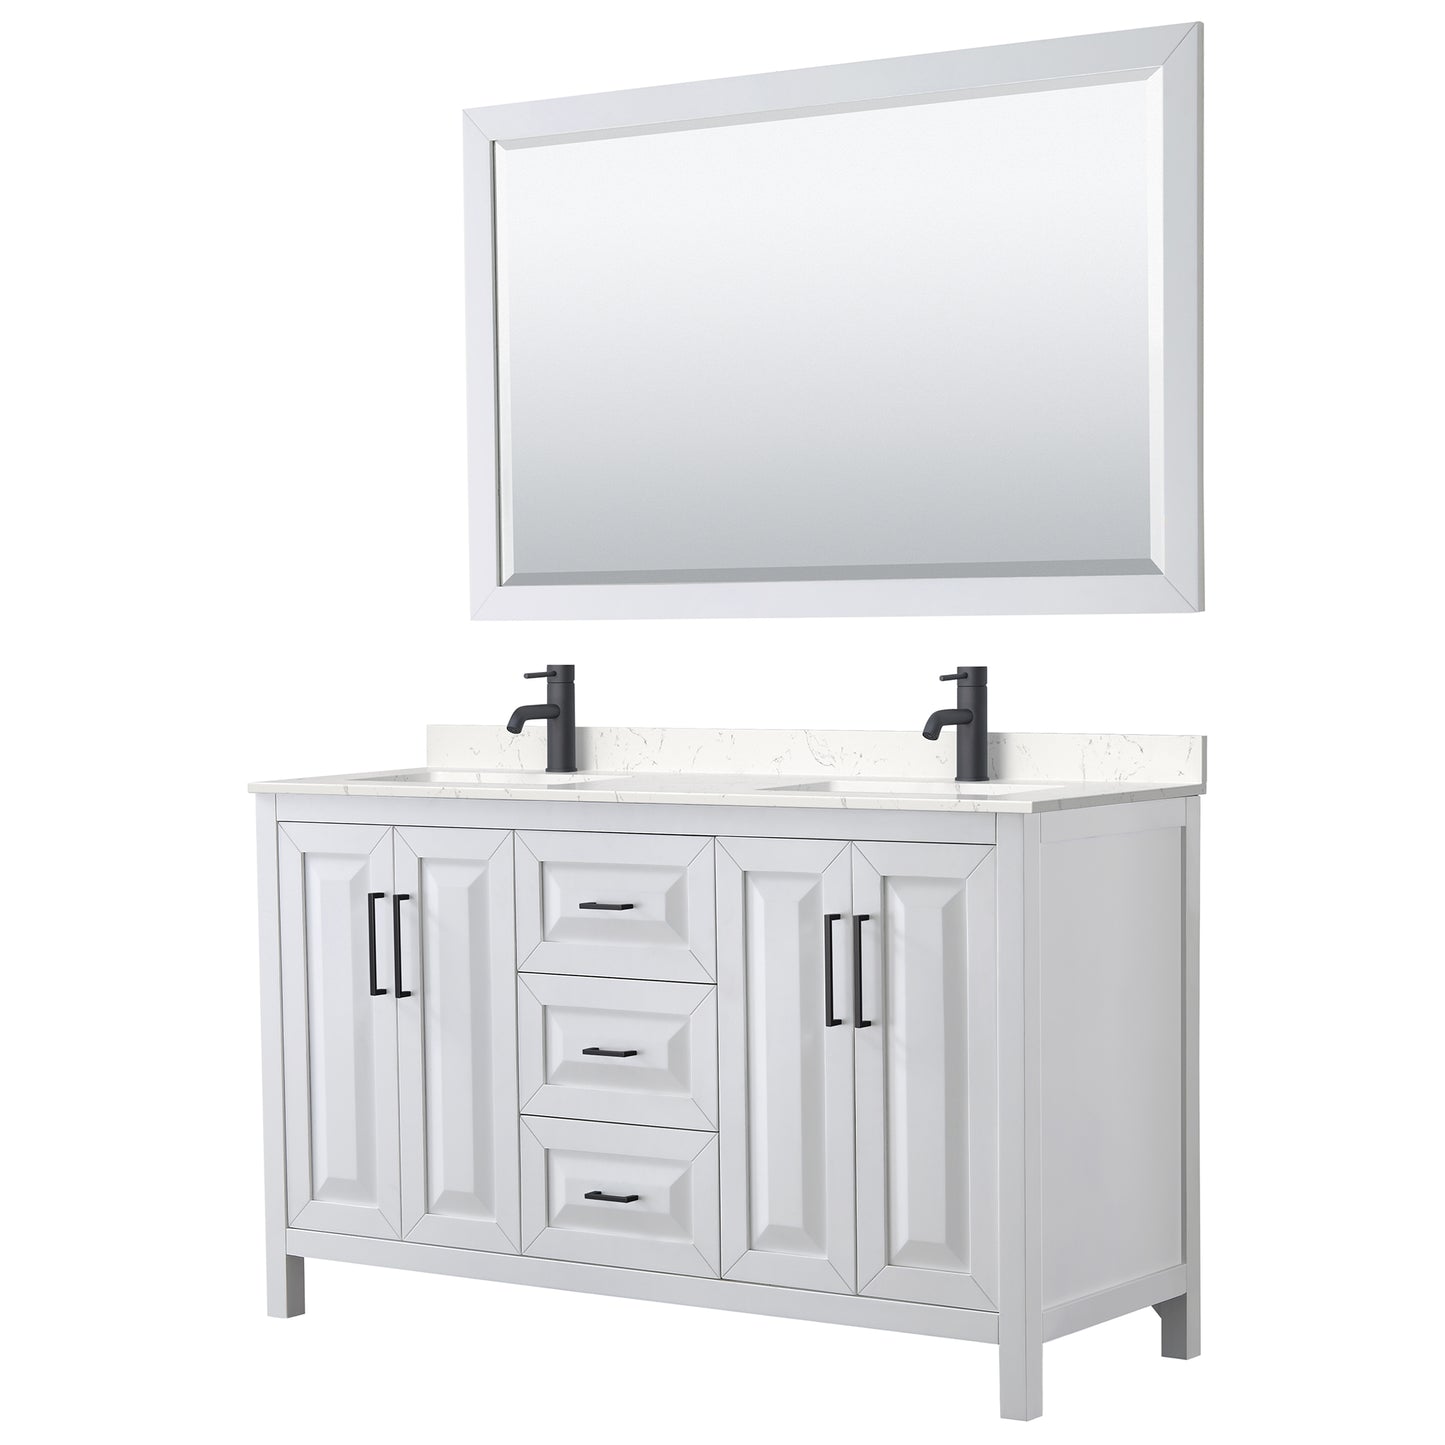 Wyndham Daria 60 Inch Double Bathroom Vanity Light-Vein Carrara Cultured Marble Countertop, Undermount Square Sinks in Matte Black Trim with 58 Inch Mirror - Luxe Bathroom Vanities